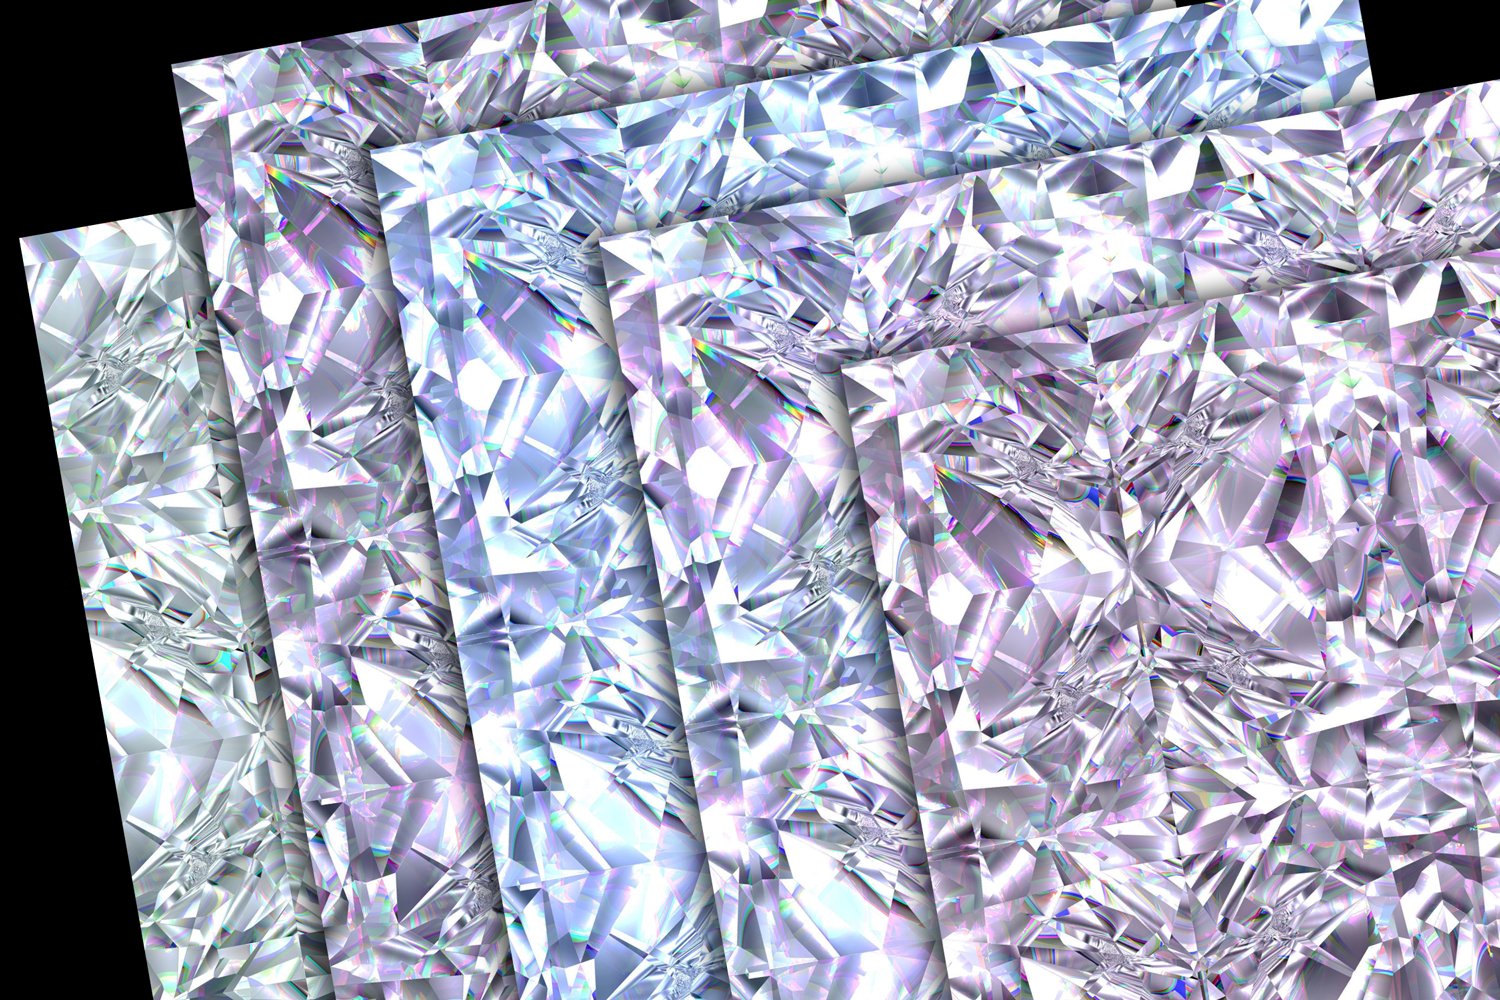 Iridescent Gemstone Textures preview image.